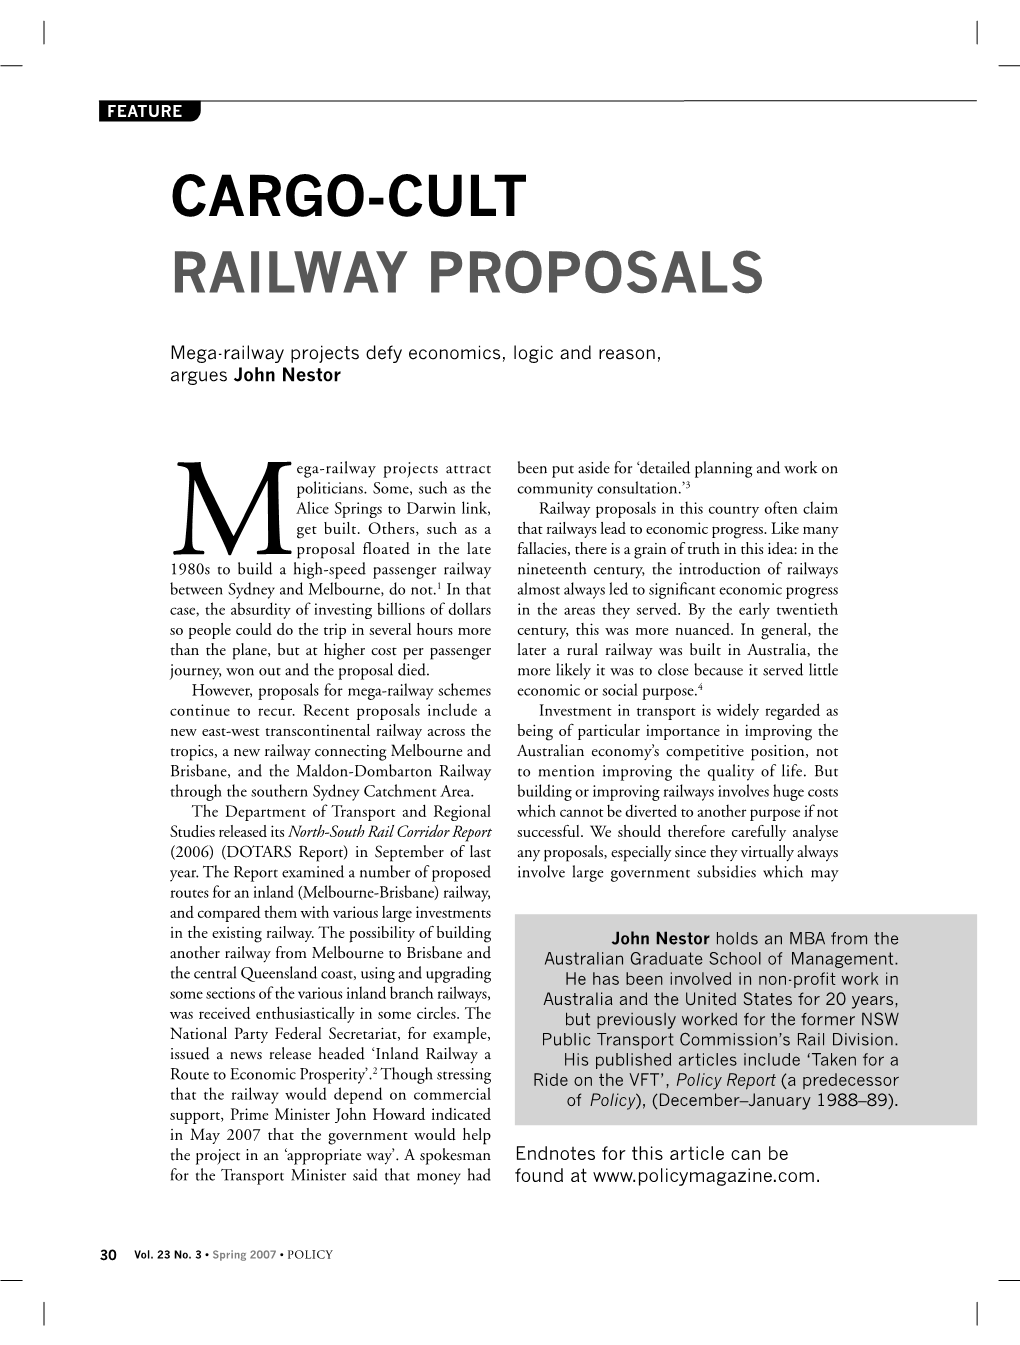 Cargo-Cult Railway Proposals